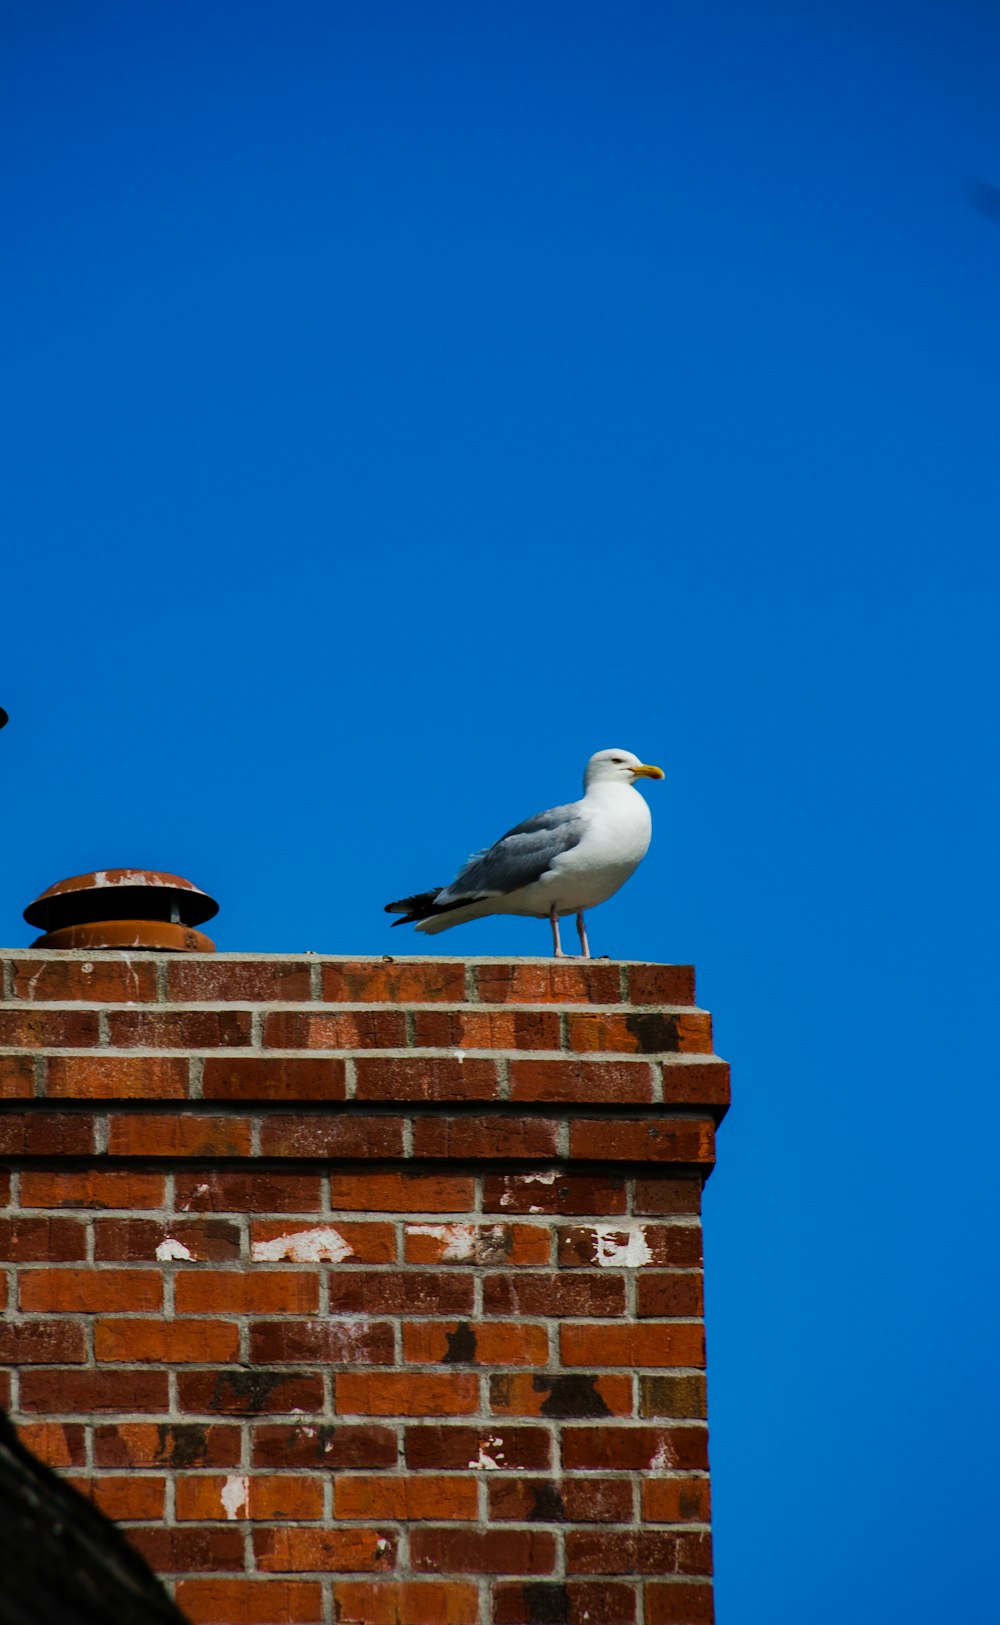 a bird on a brick wall